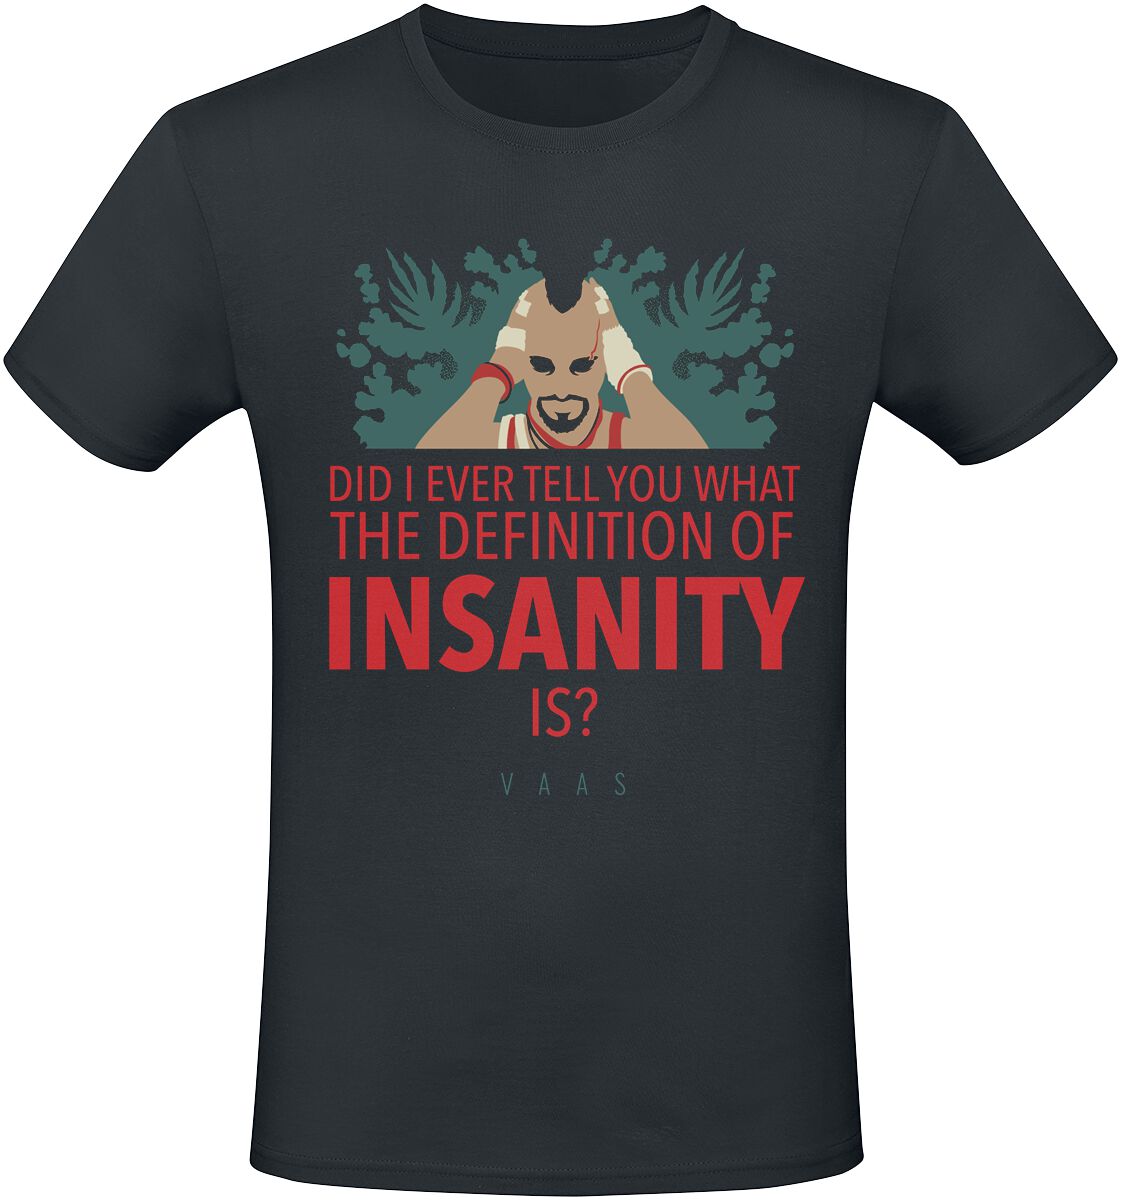 Far Cry Villains - Vaas - Insanity T-Shirt schwarz in M